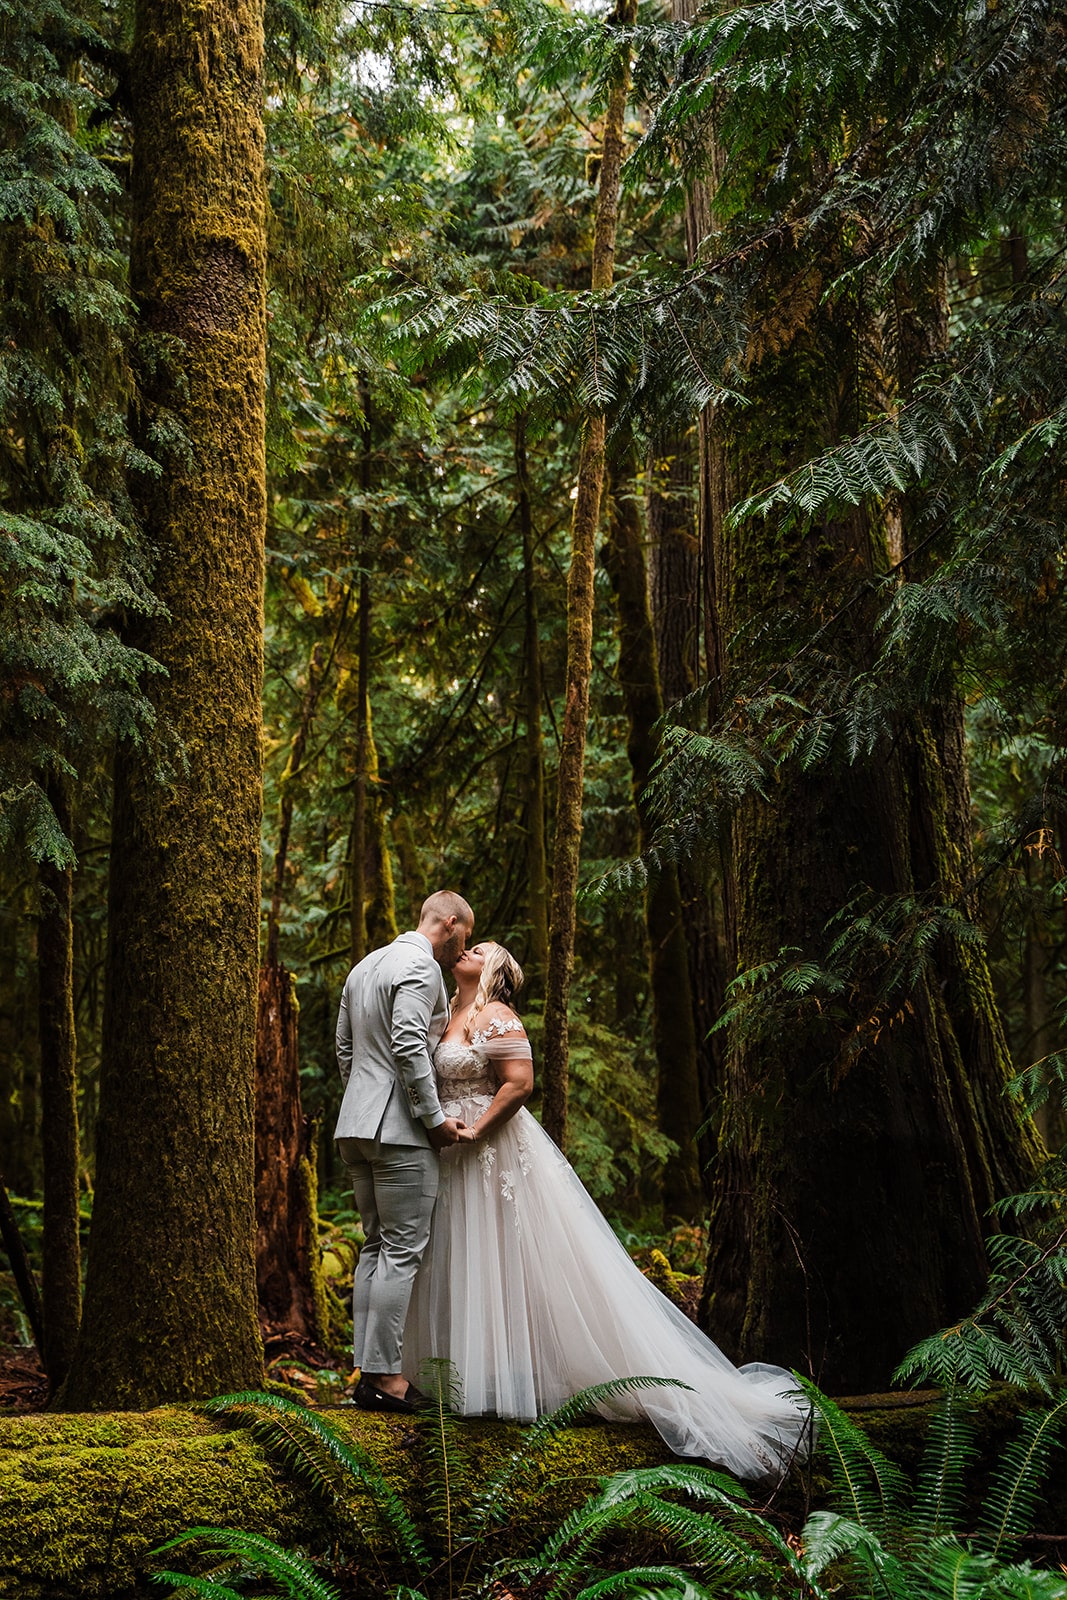 Best National Park Wedding Venues in the U.S. - Between the Pine